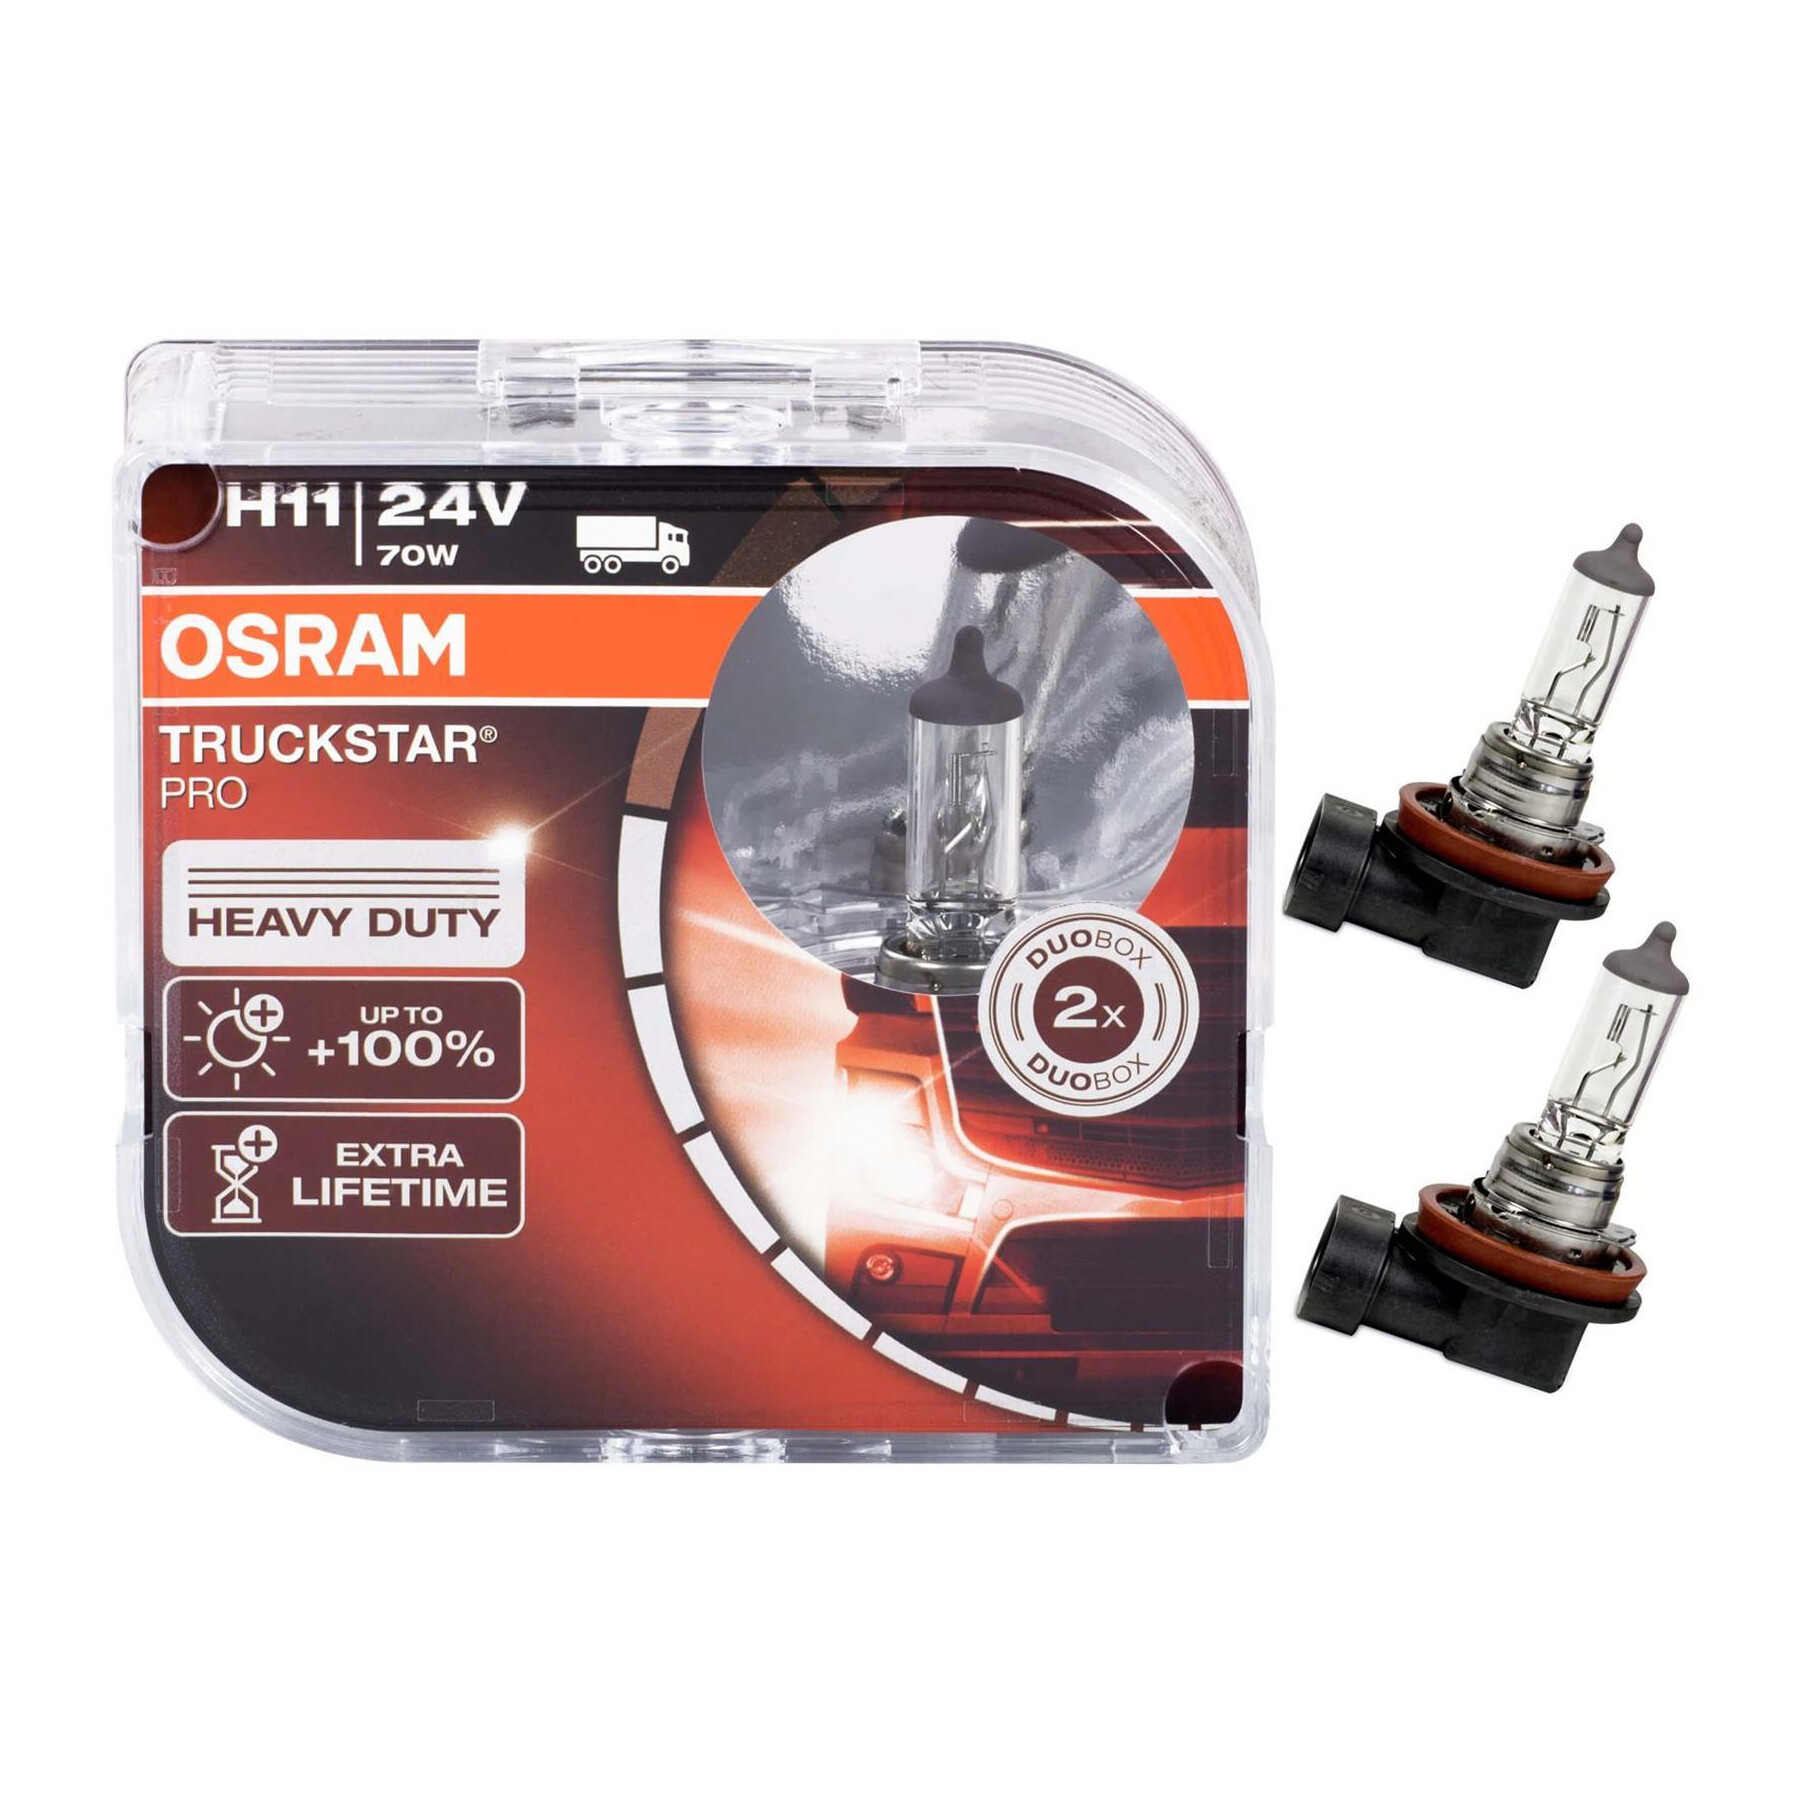 Osram Truckstar Pro H11 64216TSP-HCB 24V Duobox LKW, 28,09 €